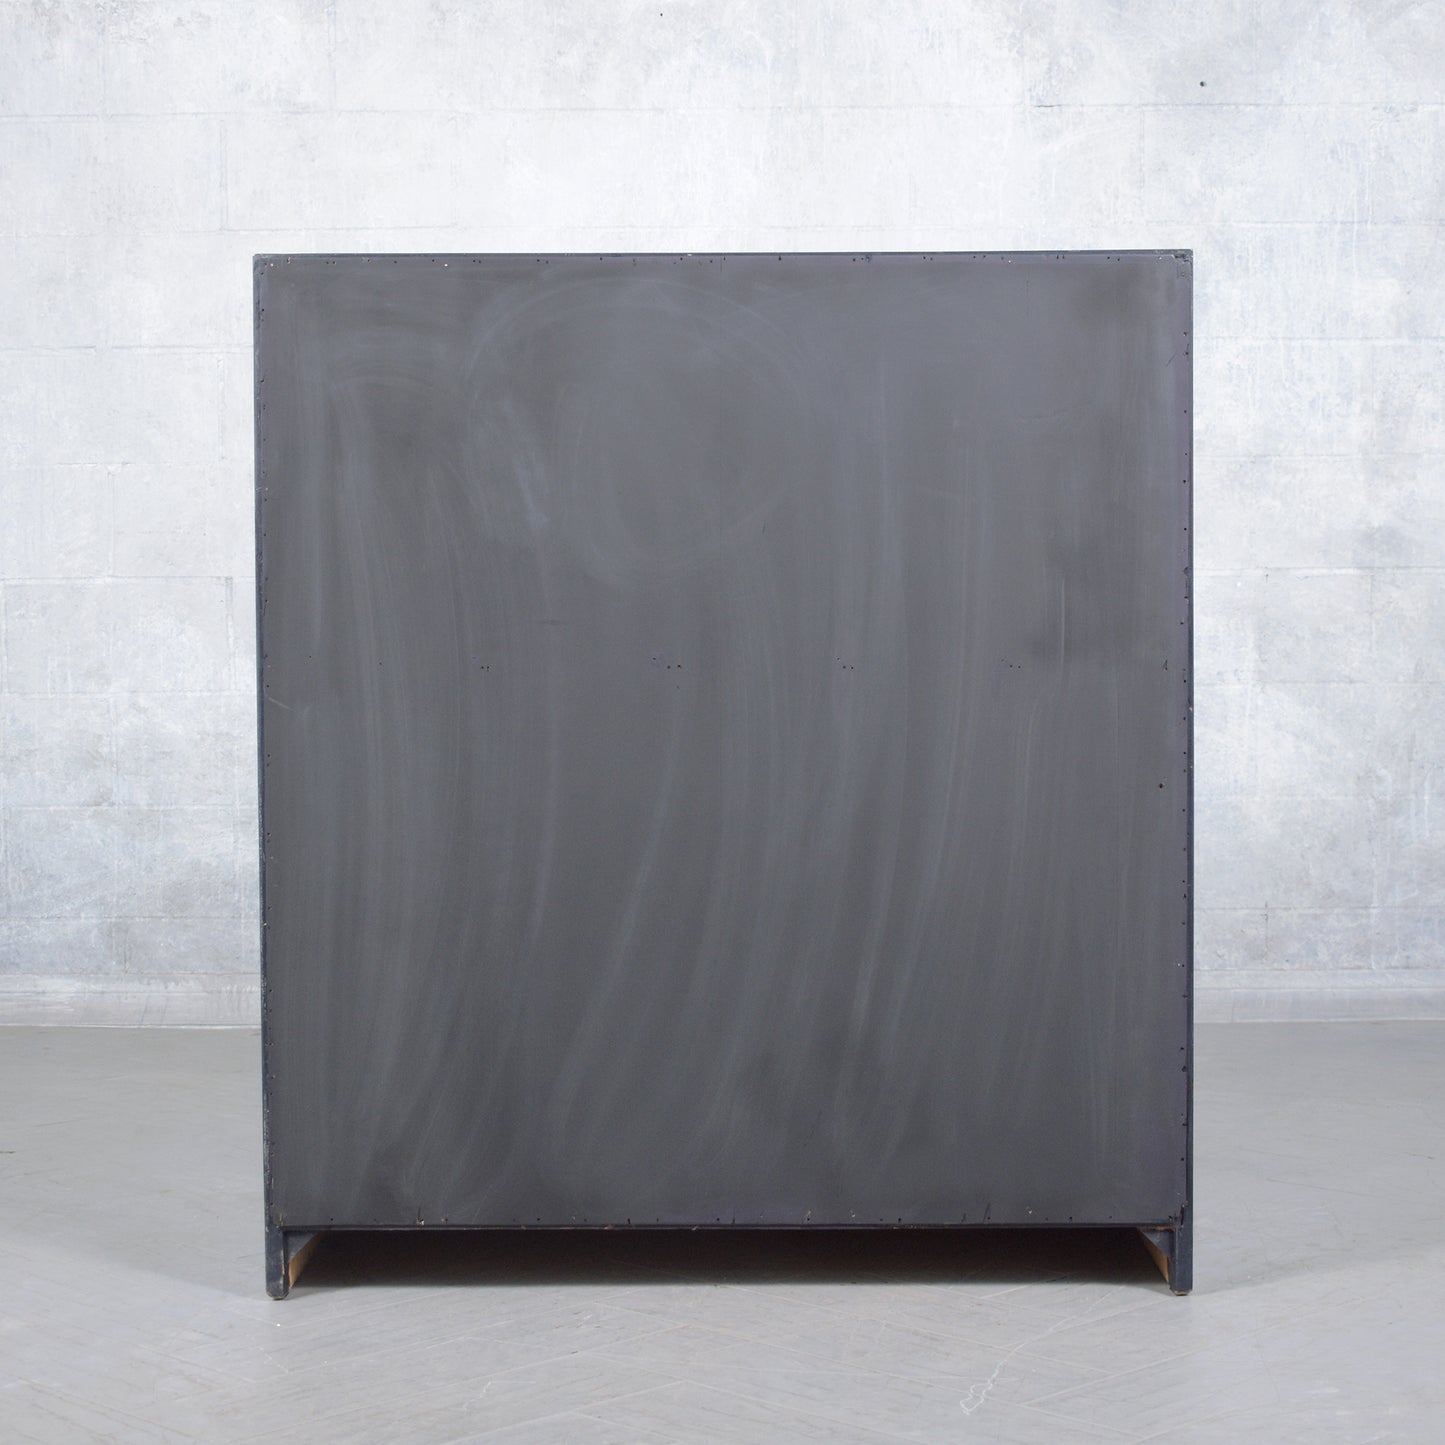 Paul Frankl Dark Grey Lacquered Dresser